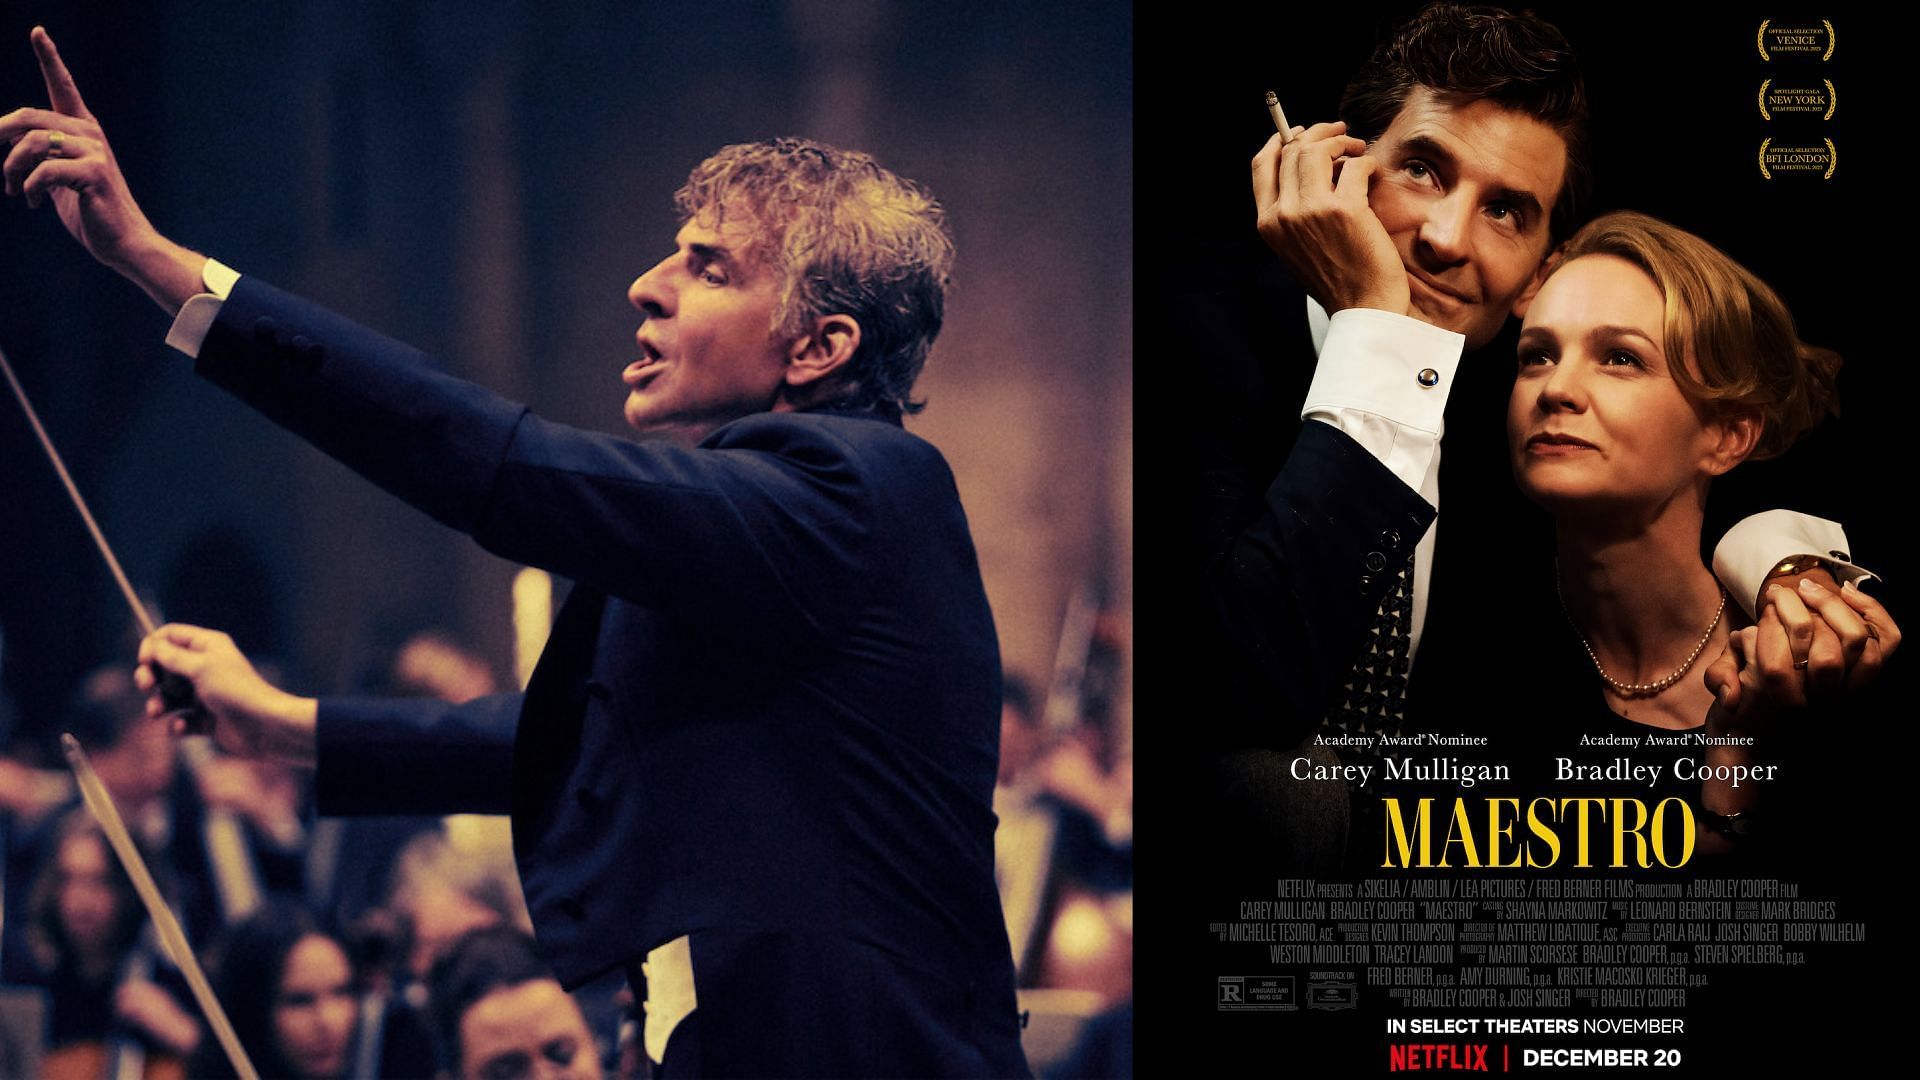 Poster of Maestro (Image via Netflix)